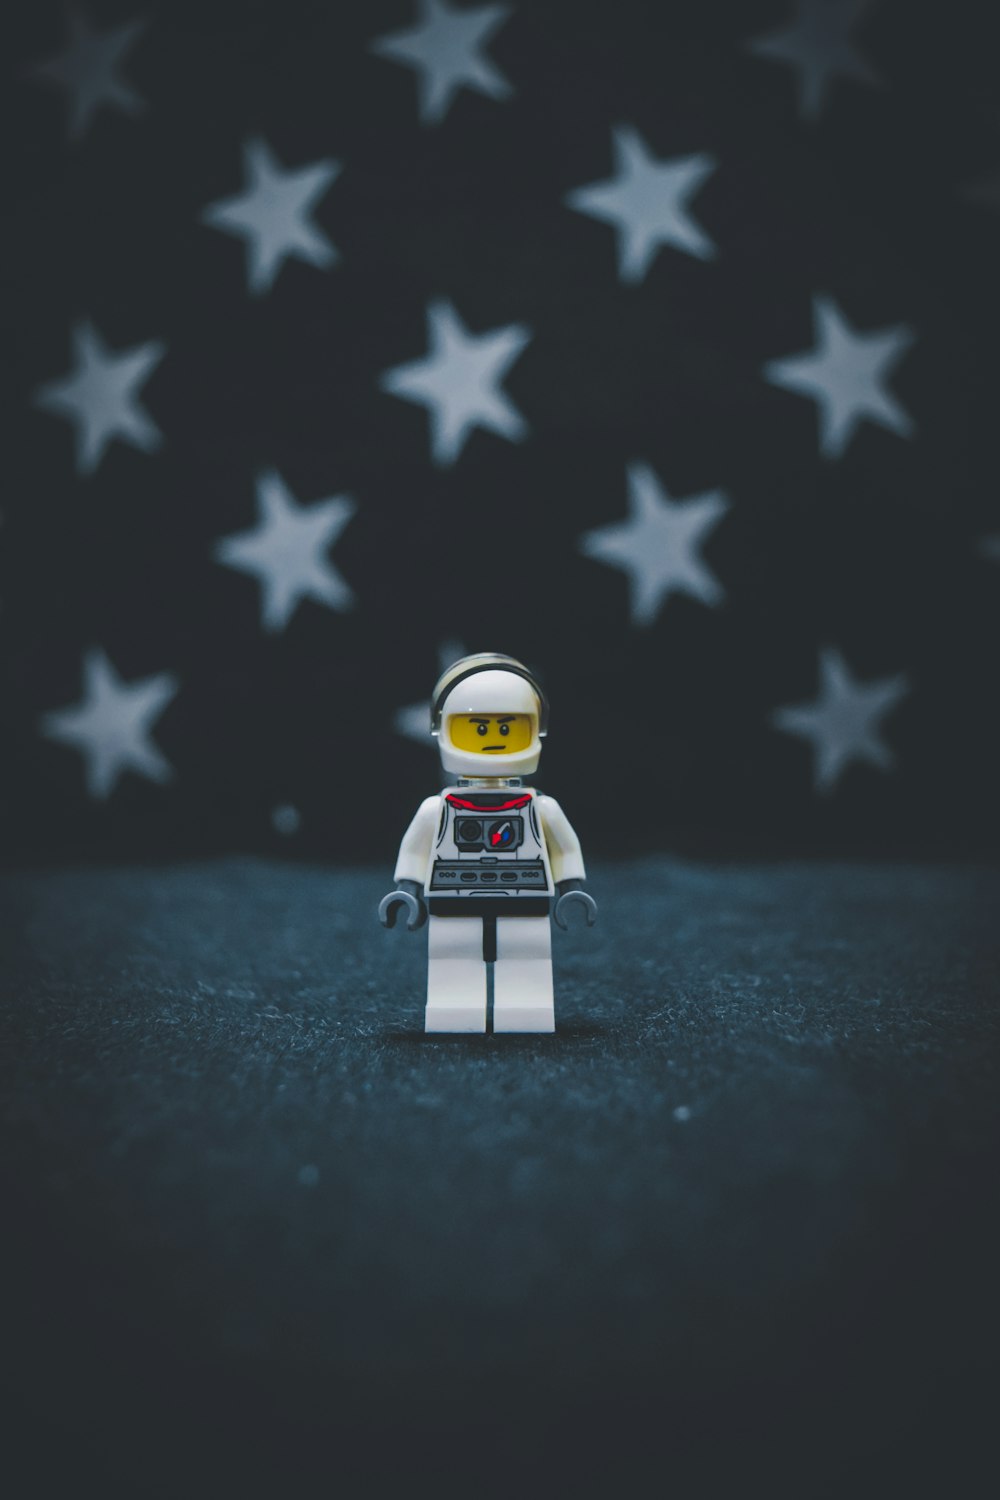 Lego astronaut on gray surface